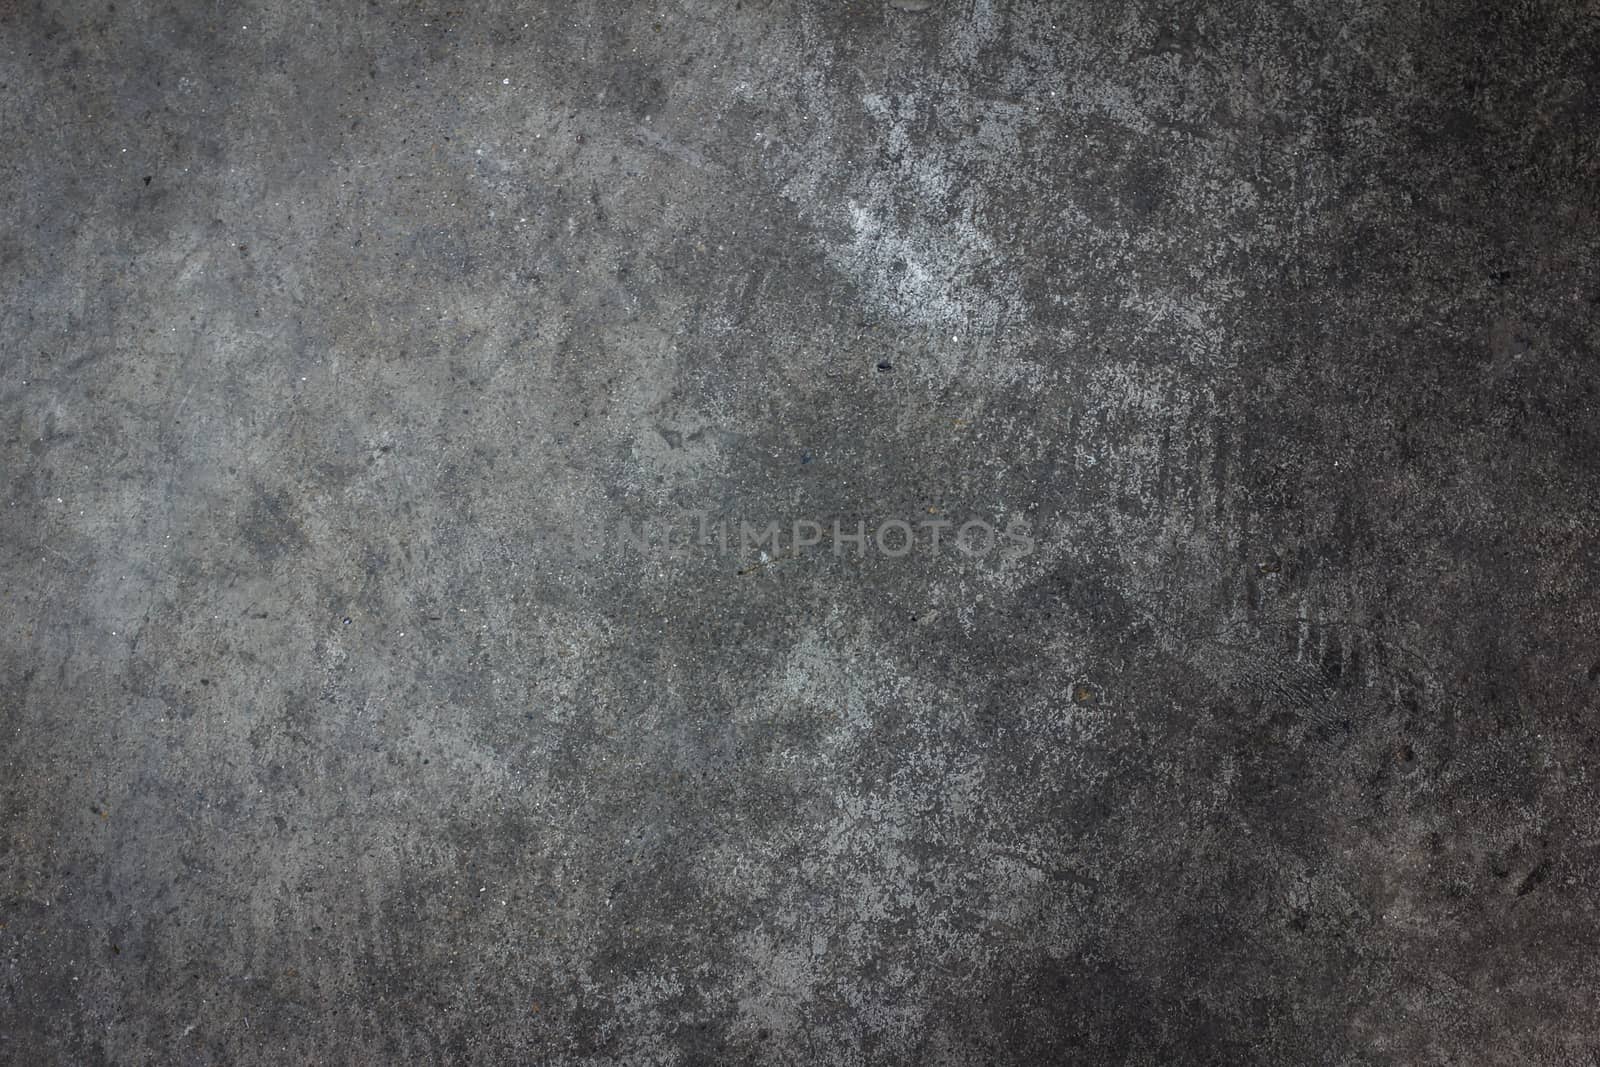 The gray texture of cement floor